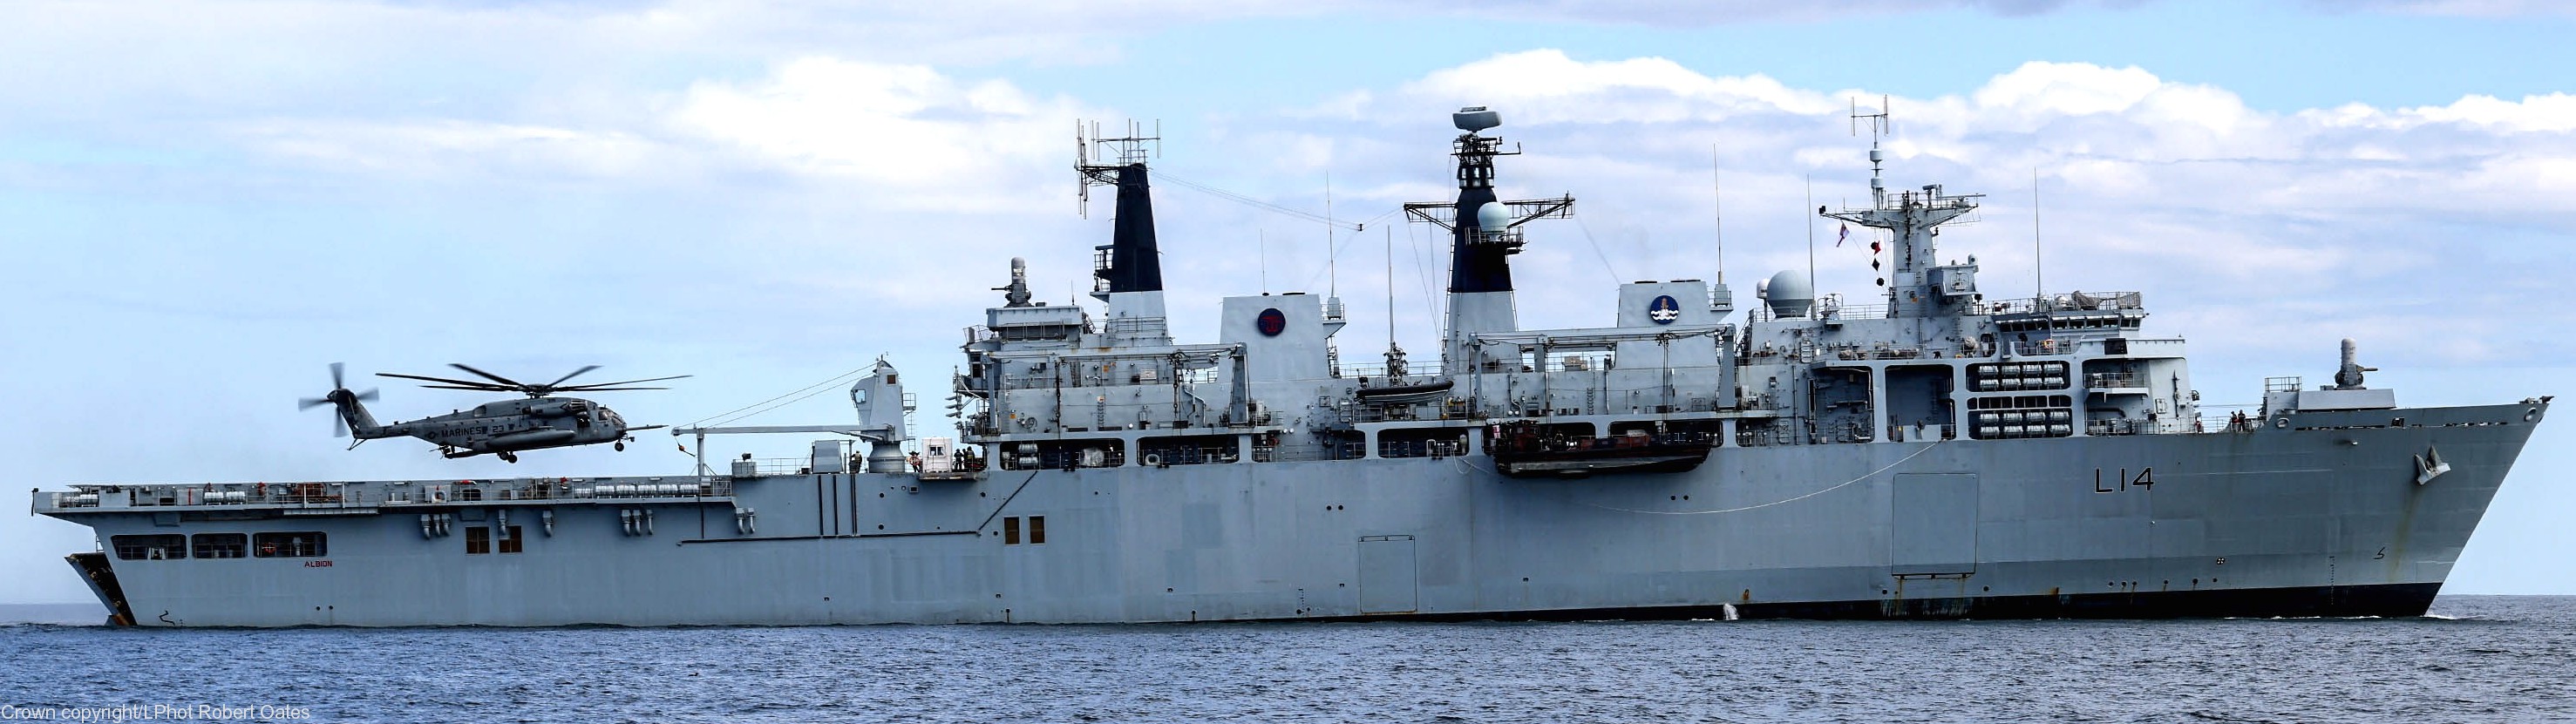 l14 hms albion amphibious transport dock assault ship landing platform lpd royal navy 63